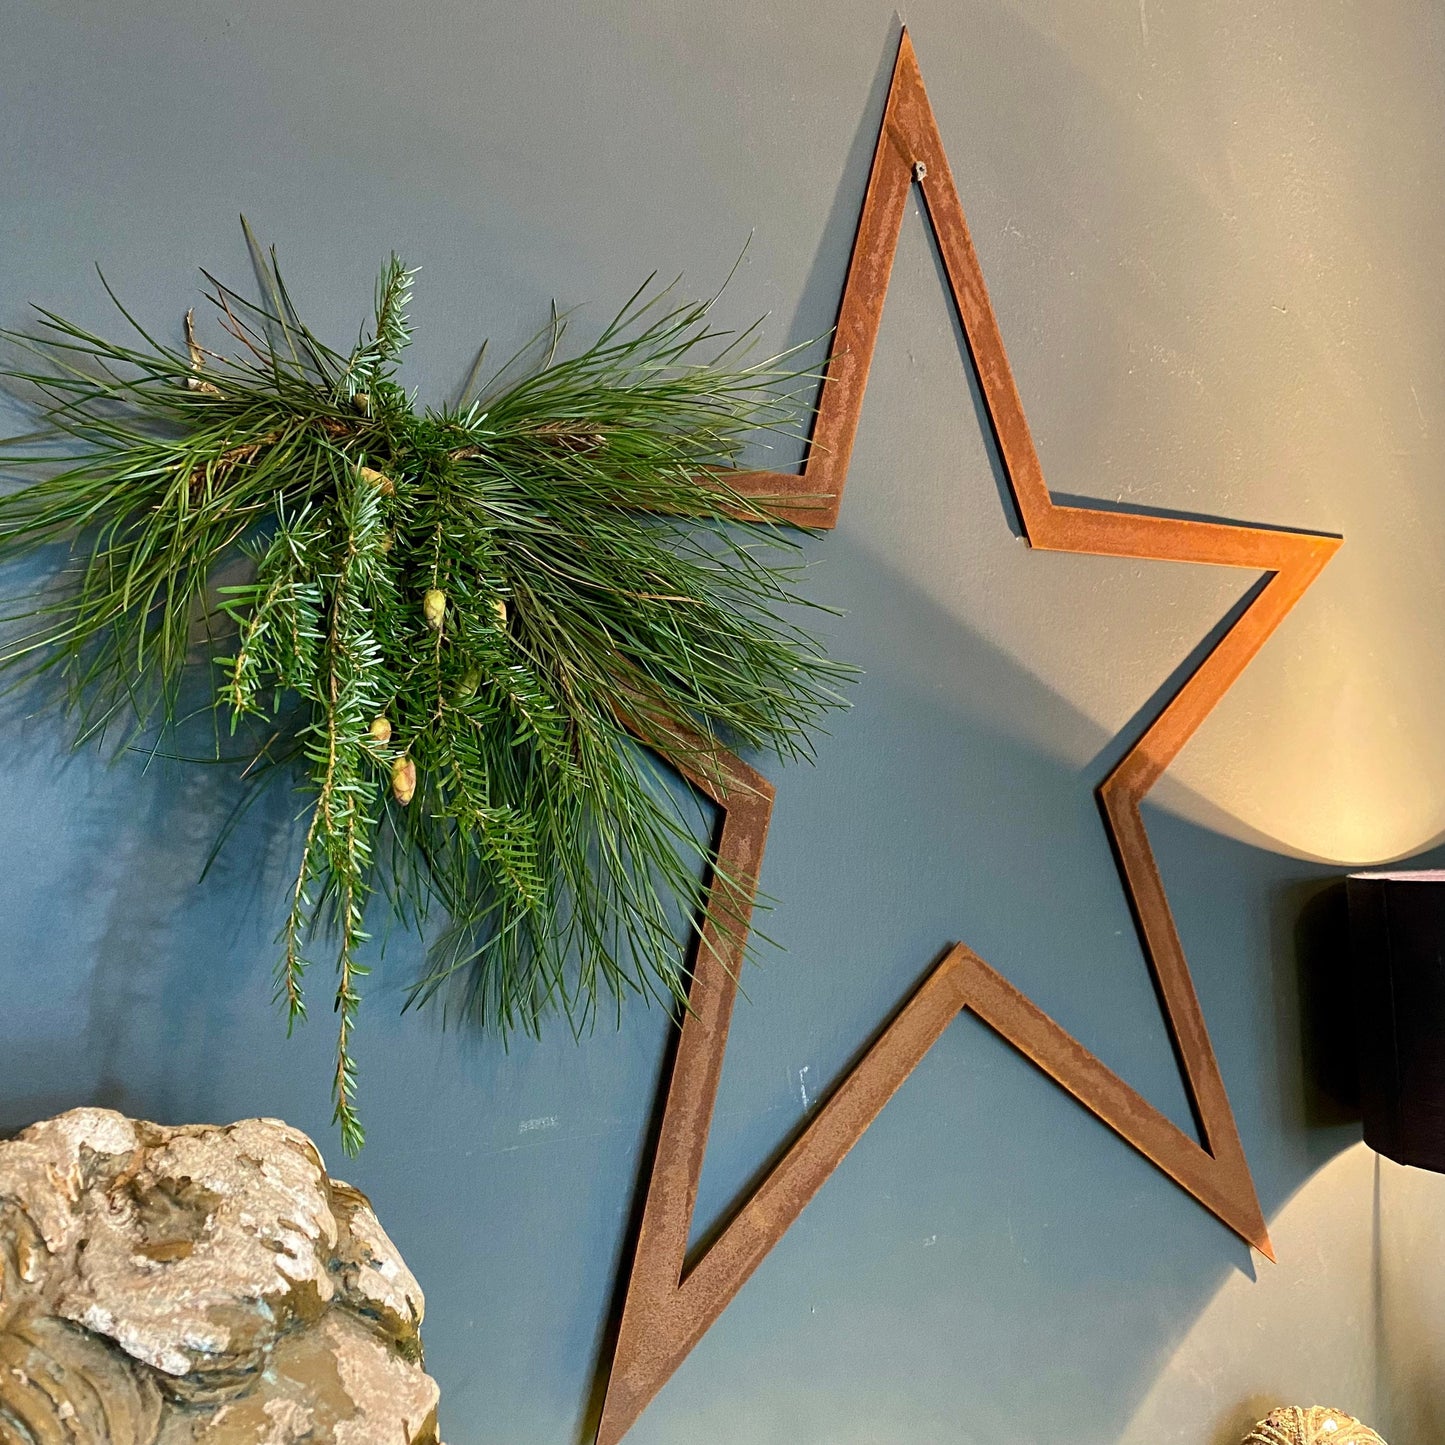 Rusty Metal Christmas Star Decoration, Alternative wreath